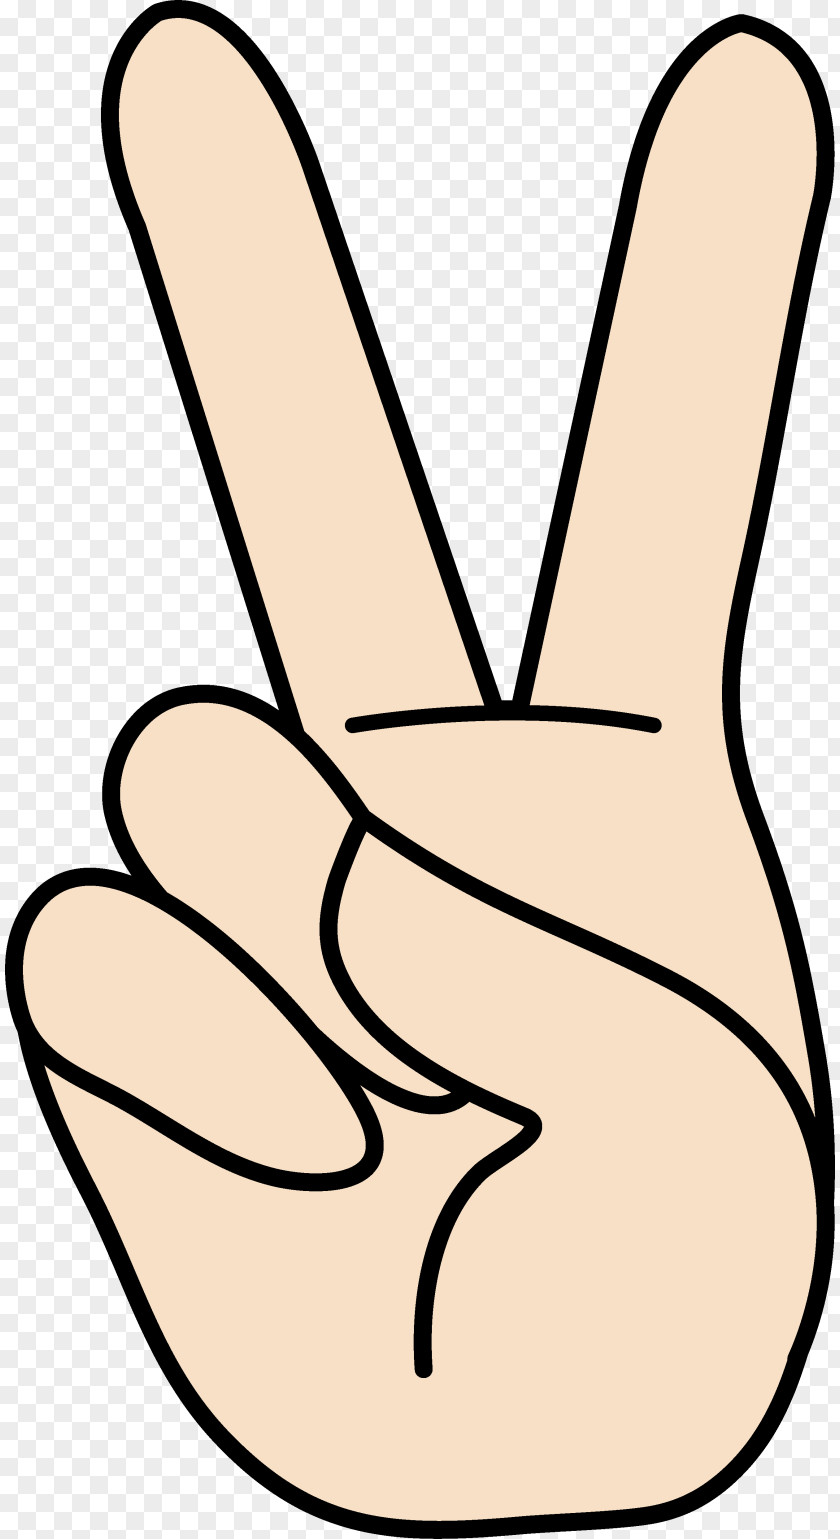 Peaceful Signs Cliparts Peace Symbols V Sign Gesture Language Clip Art PNG